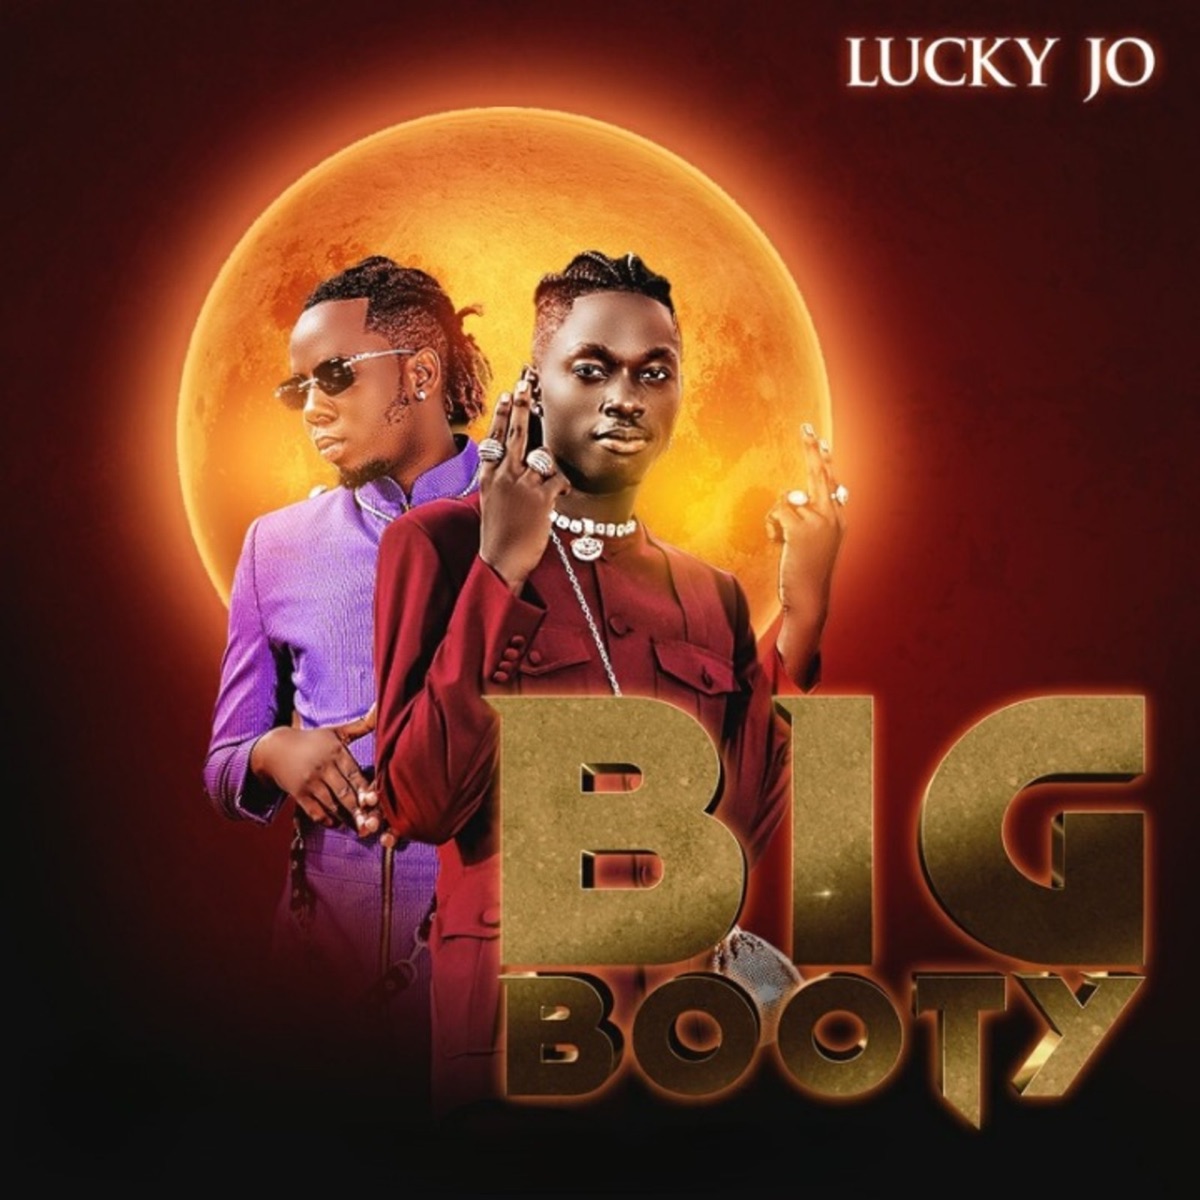 Big Booty - Single - Album by Lucky jo - Apple Music